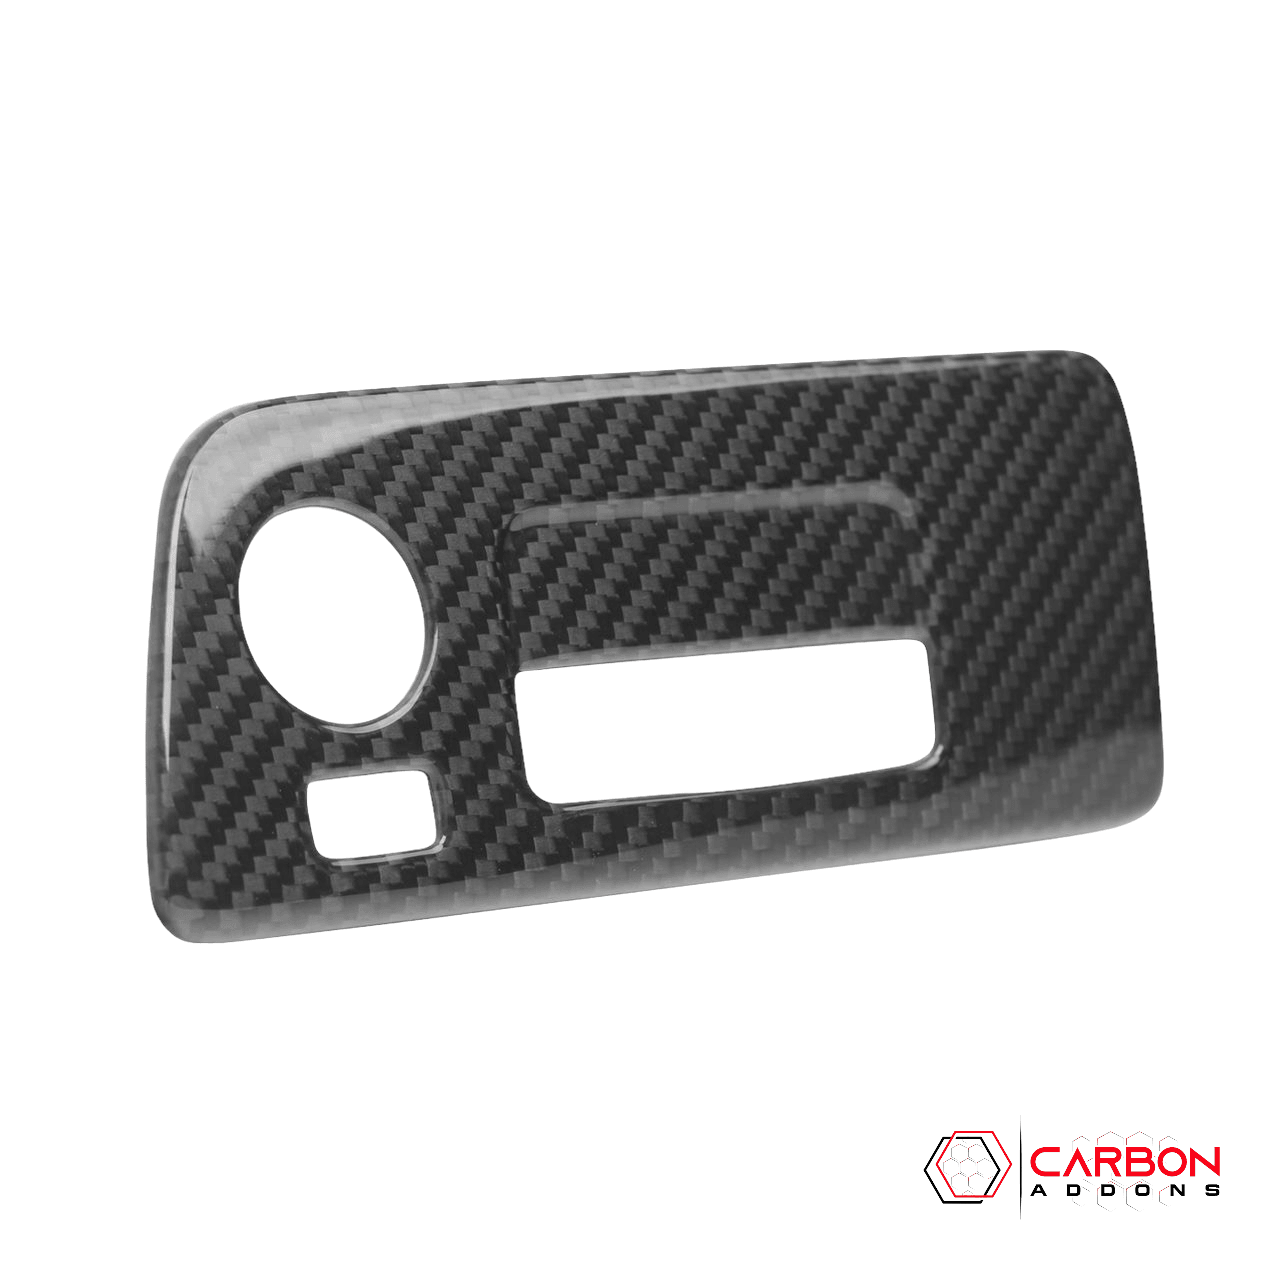 C7 Corvette 2014-2019 Real Carbon Fiber Headlight Switch Trim Cover - carbonaddons Carbon Fiber Parts, Accessories, Upgrades, Mods